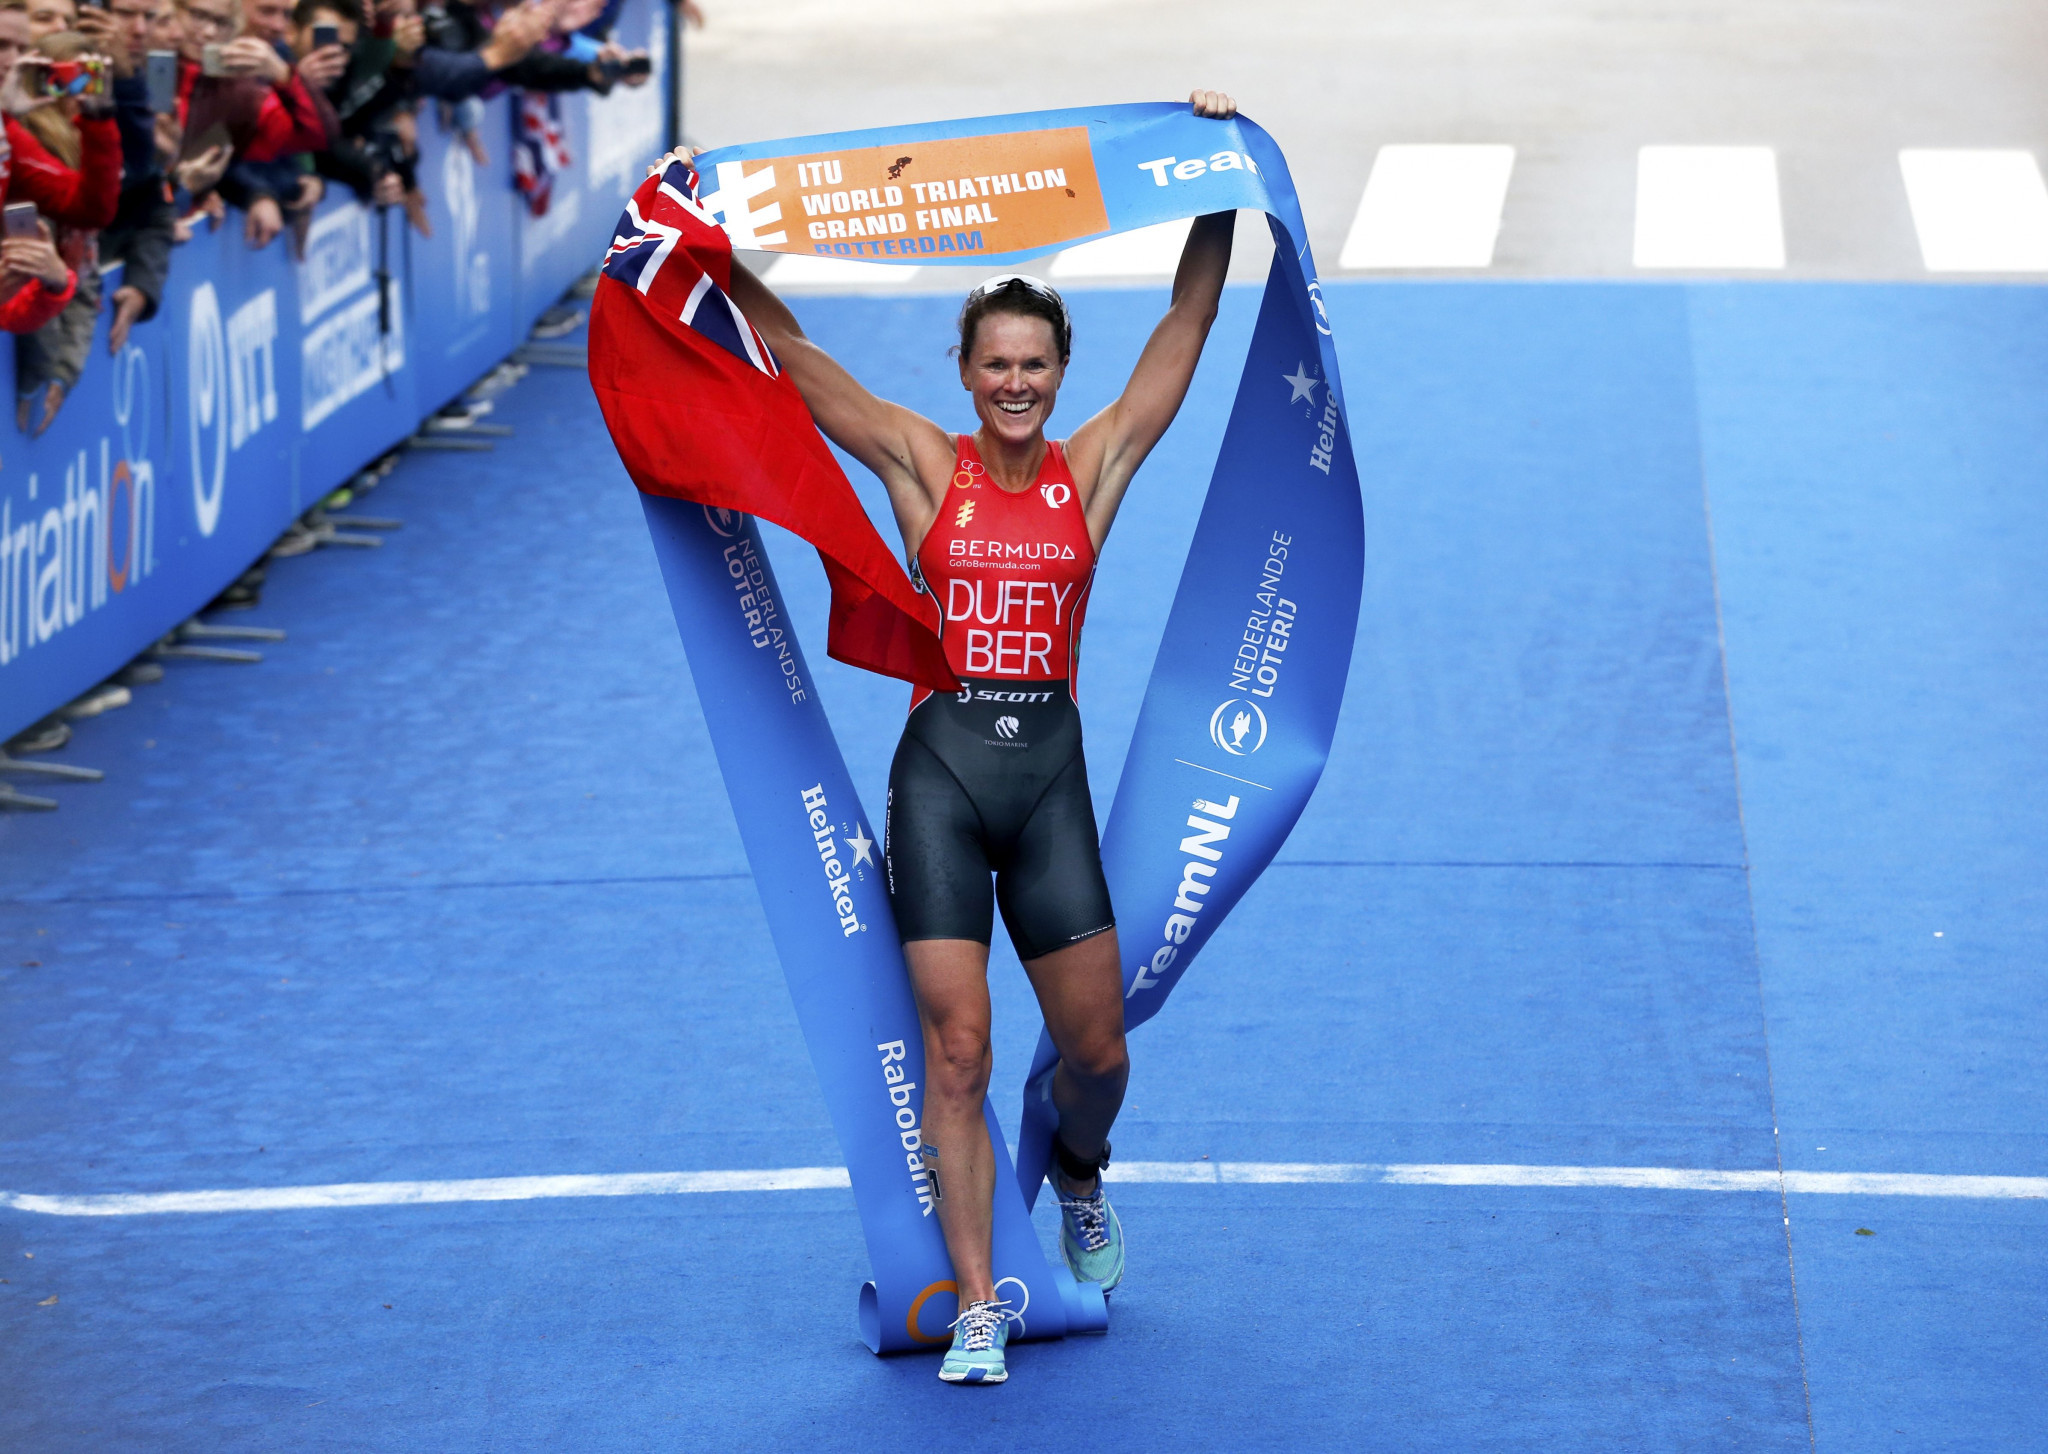  Mola and Duffy retain triathlon world titles at Rotterdam Grand Final